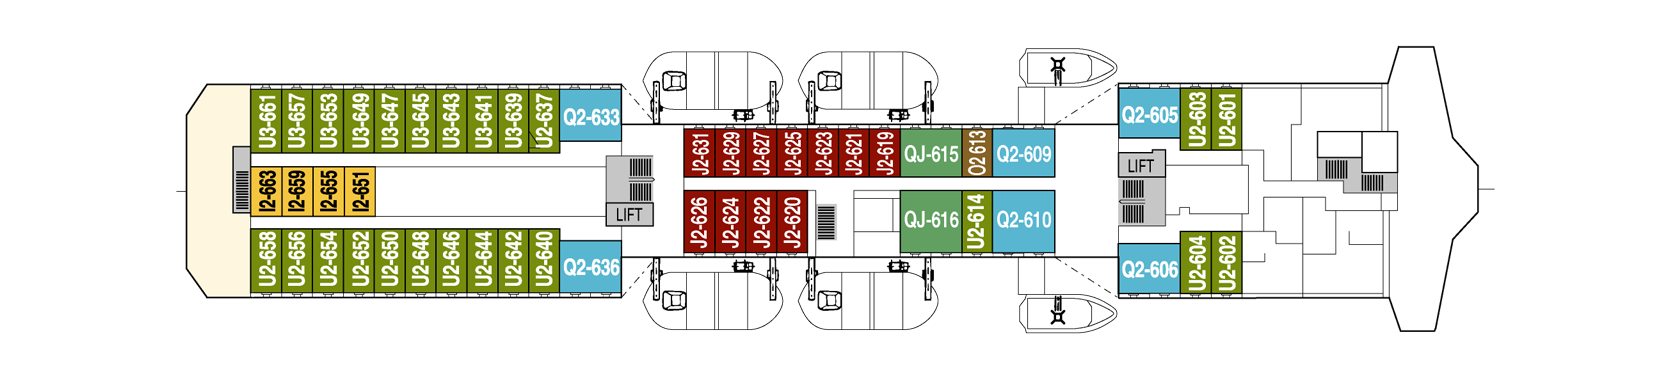 1548636348.426_d262_Hurtigruten MS Nordnorge Deck Plans Deck 6.png